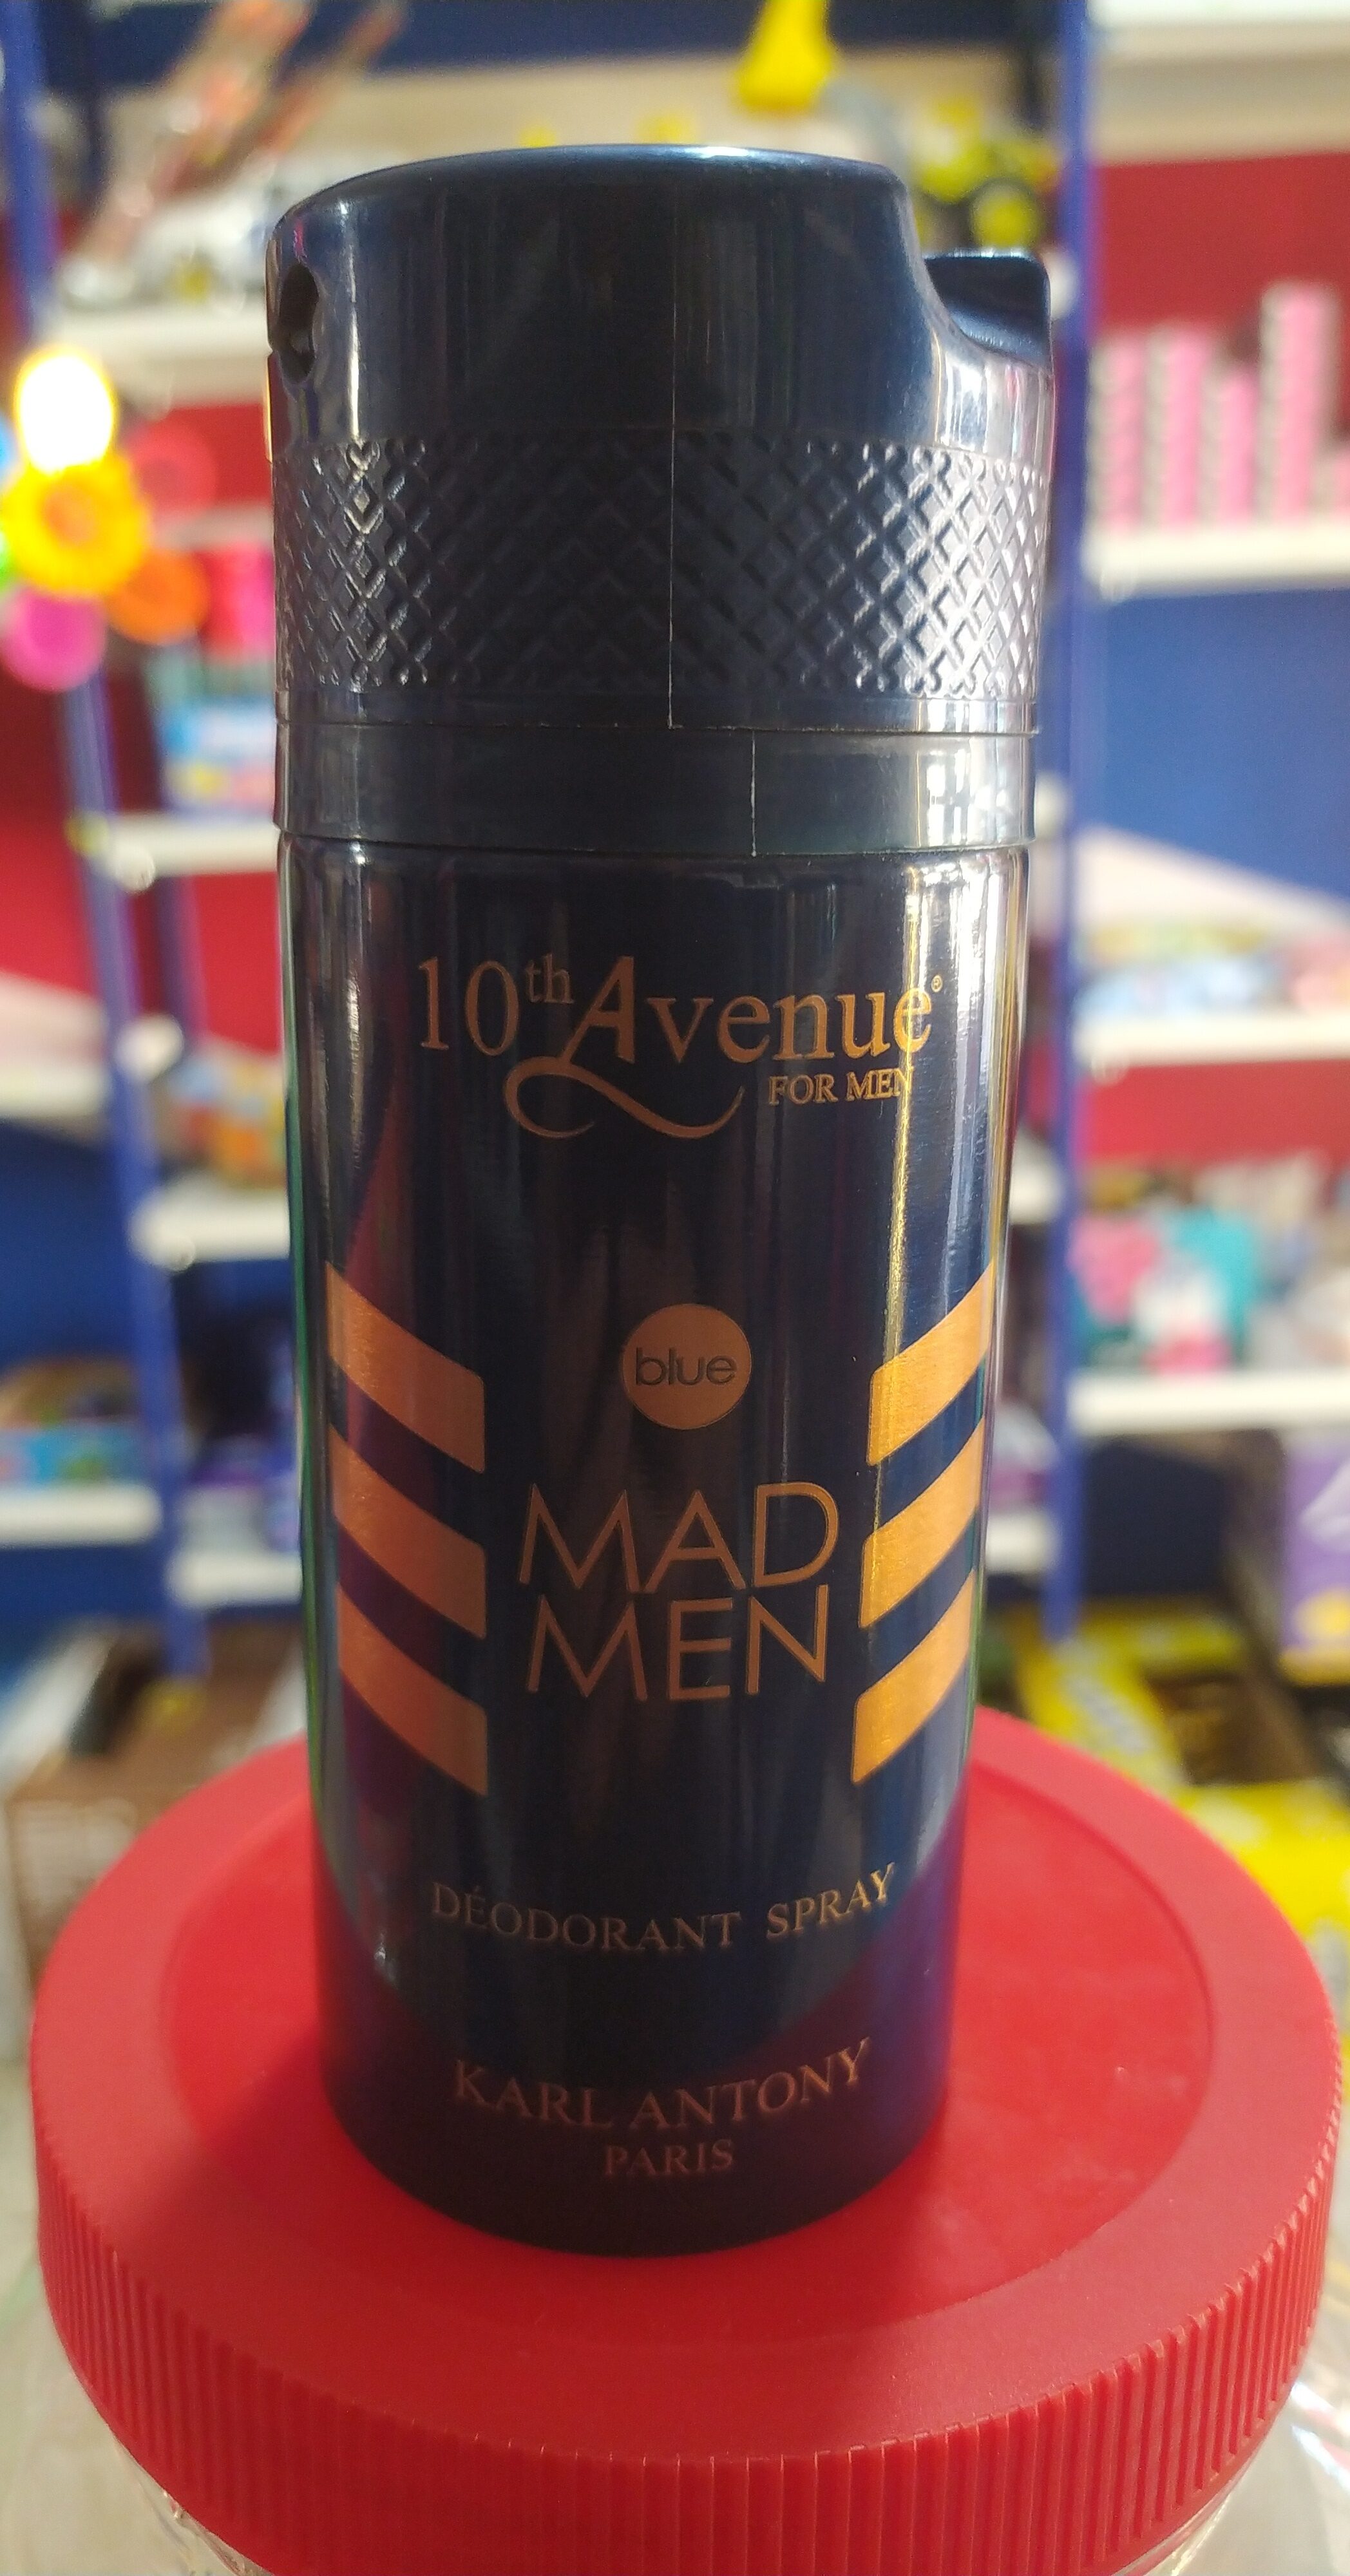 10th avenue Mad man - Produkt - en